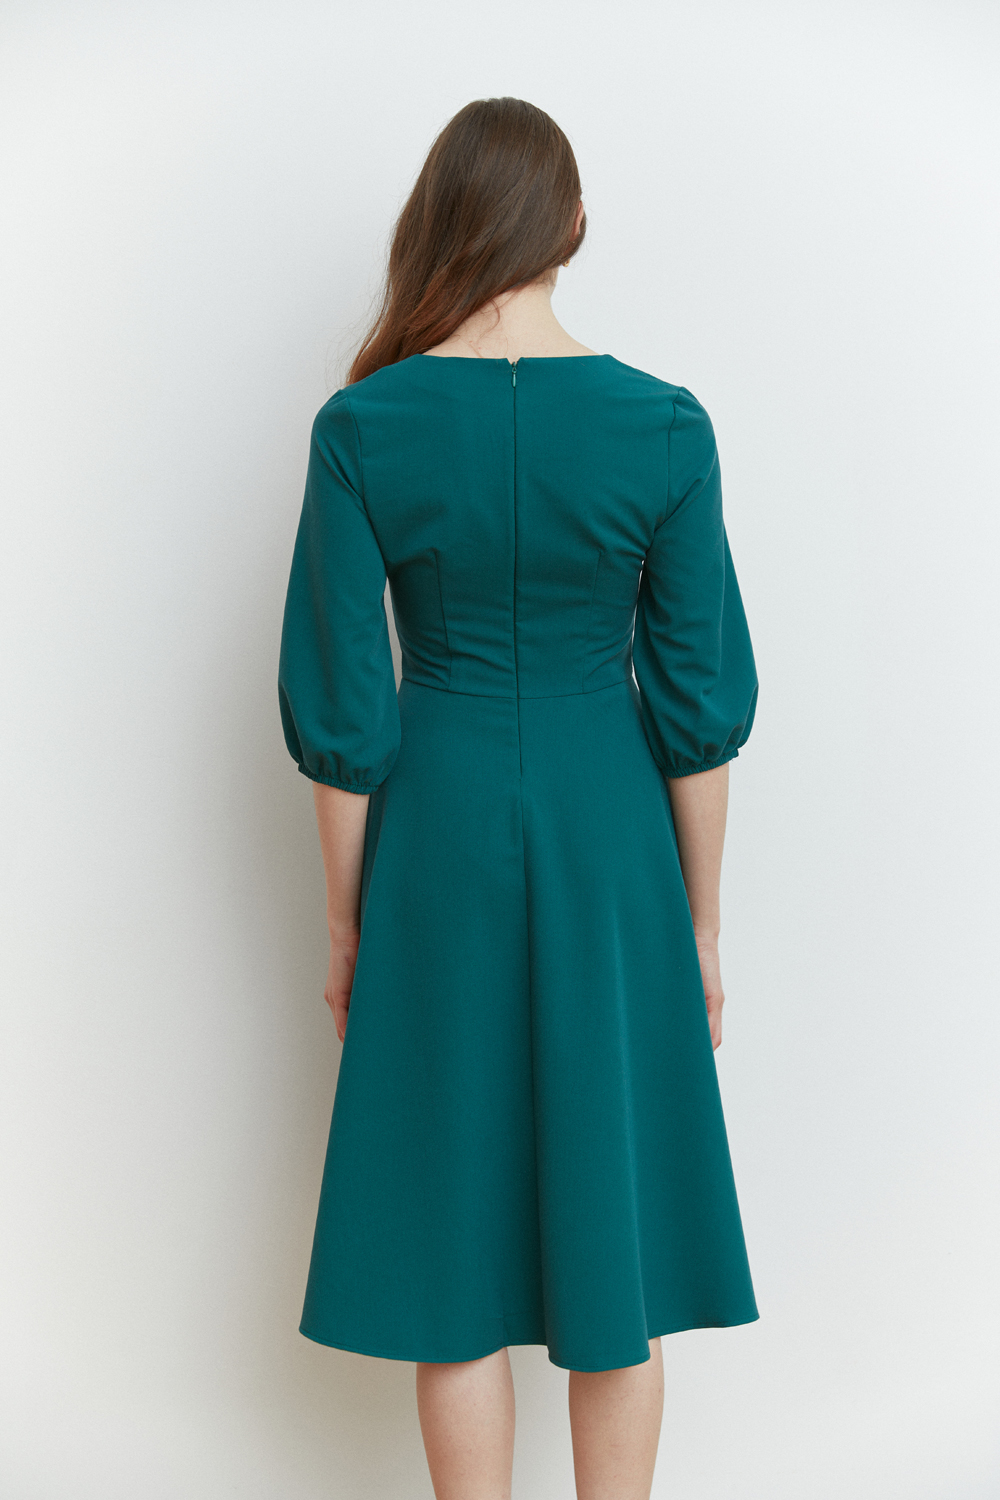 Green midi length dress with V-neck and ribbed bodice